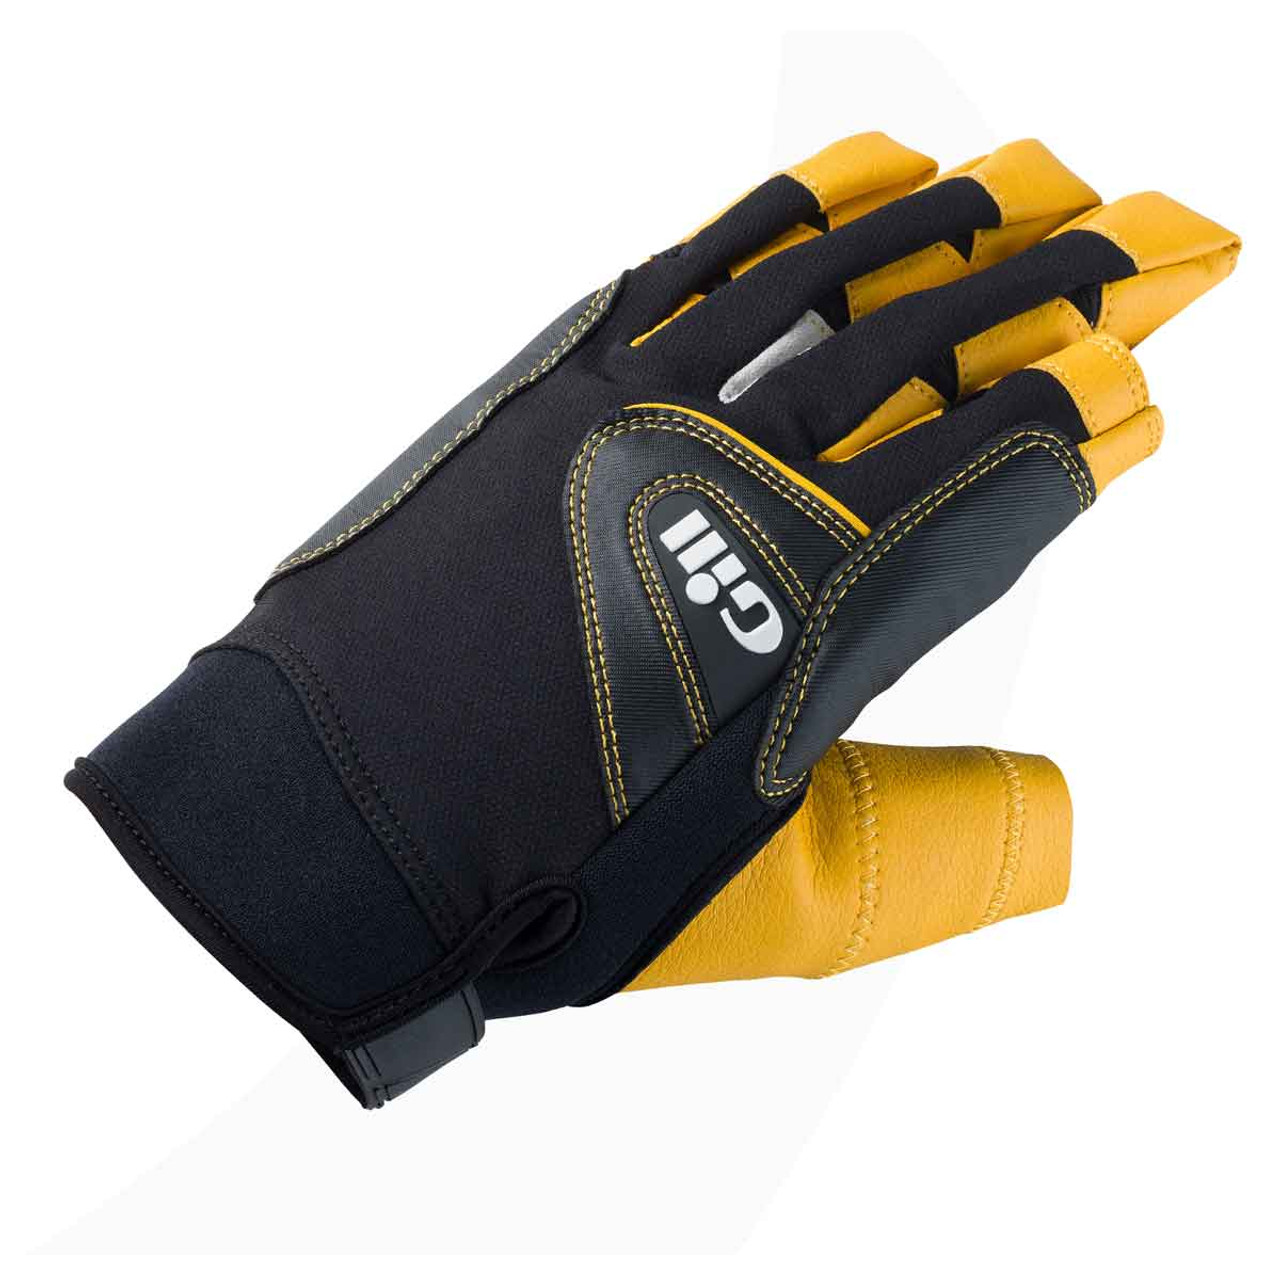 Gill Sailing Gear Pro Gloves (Long) Black